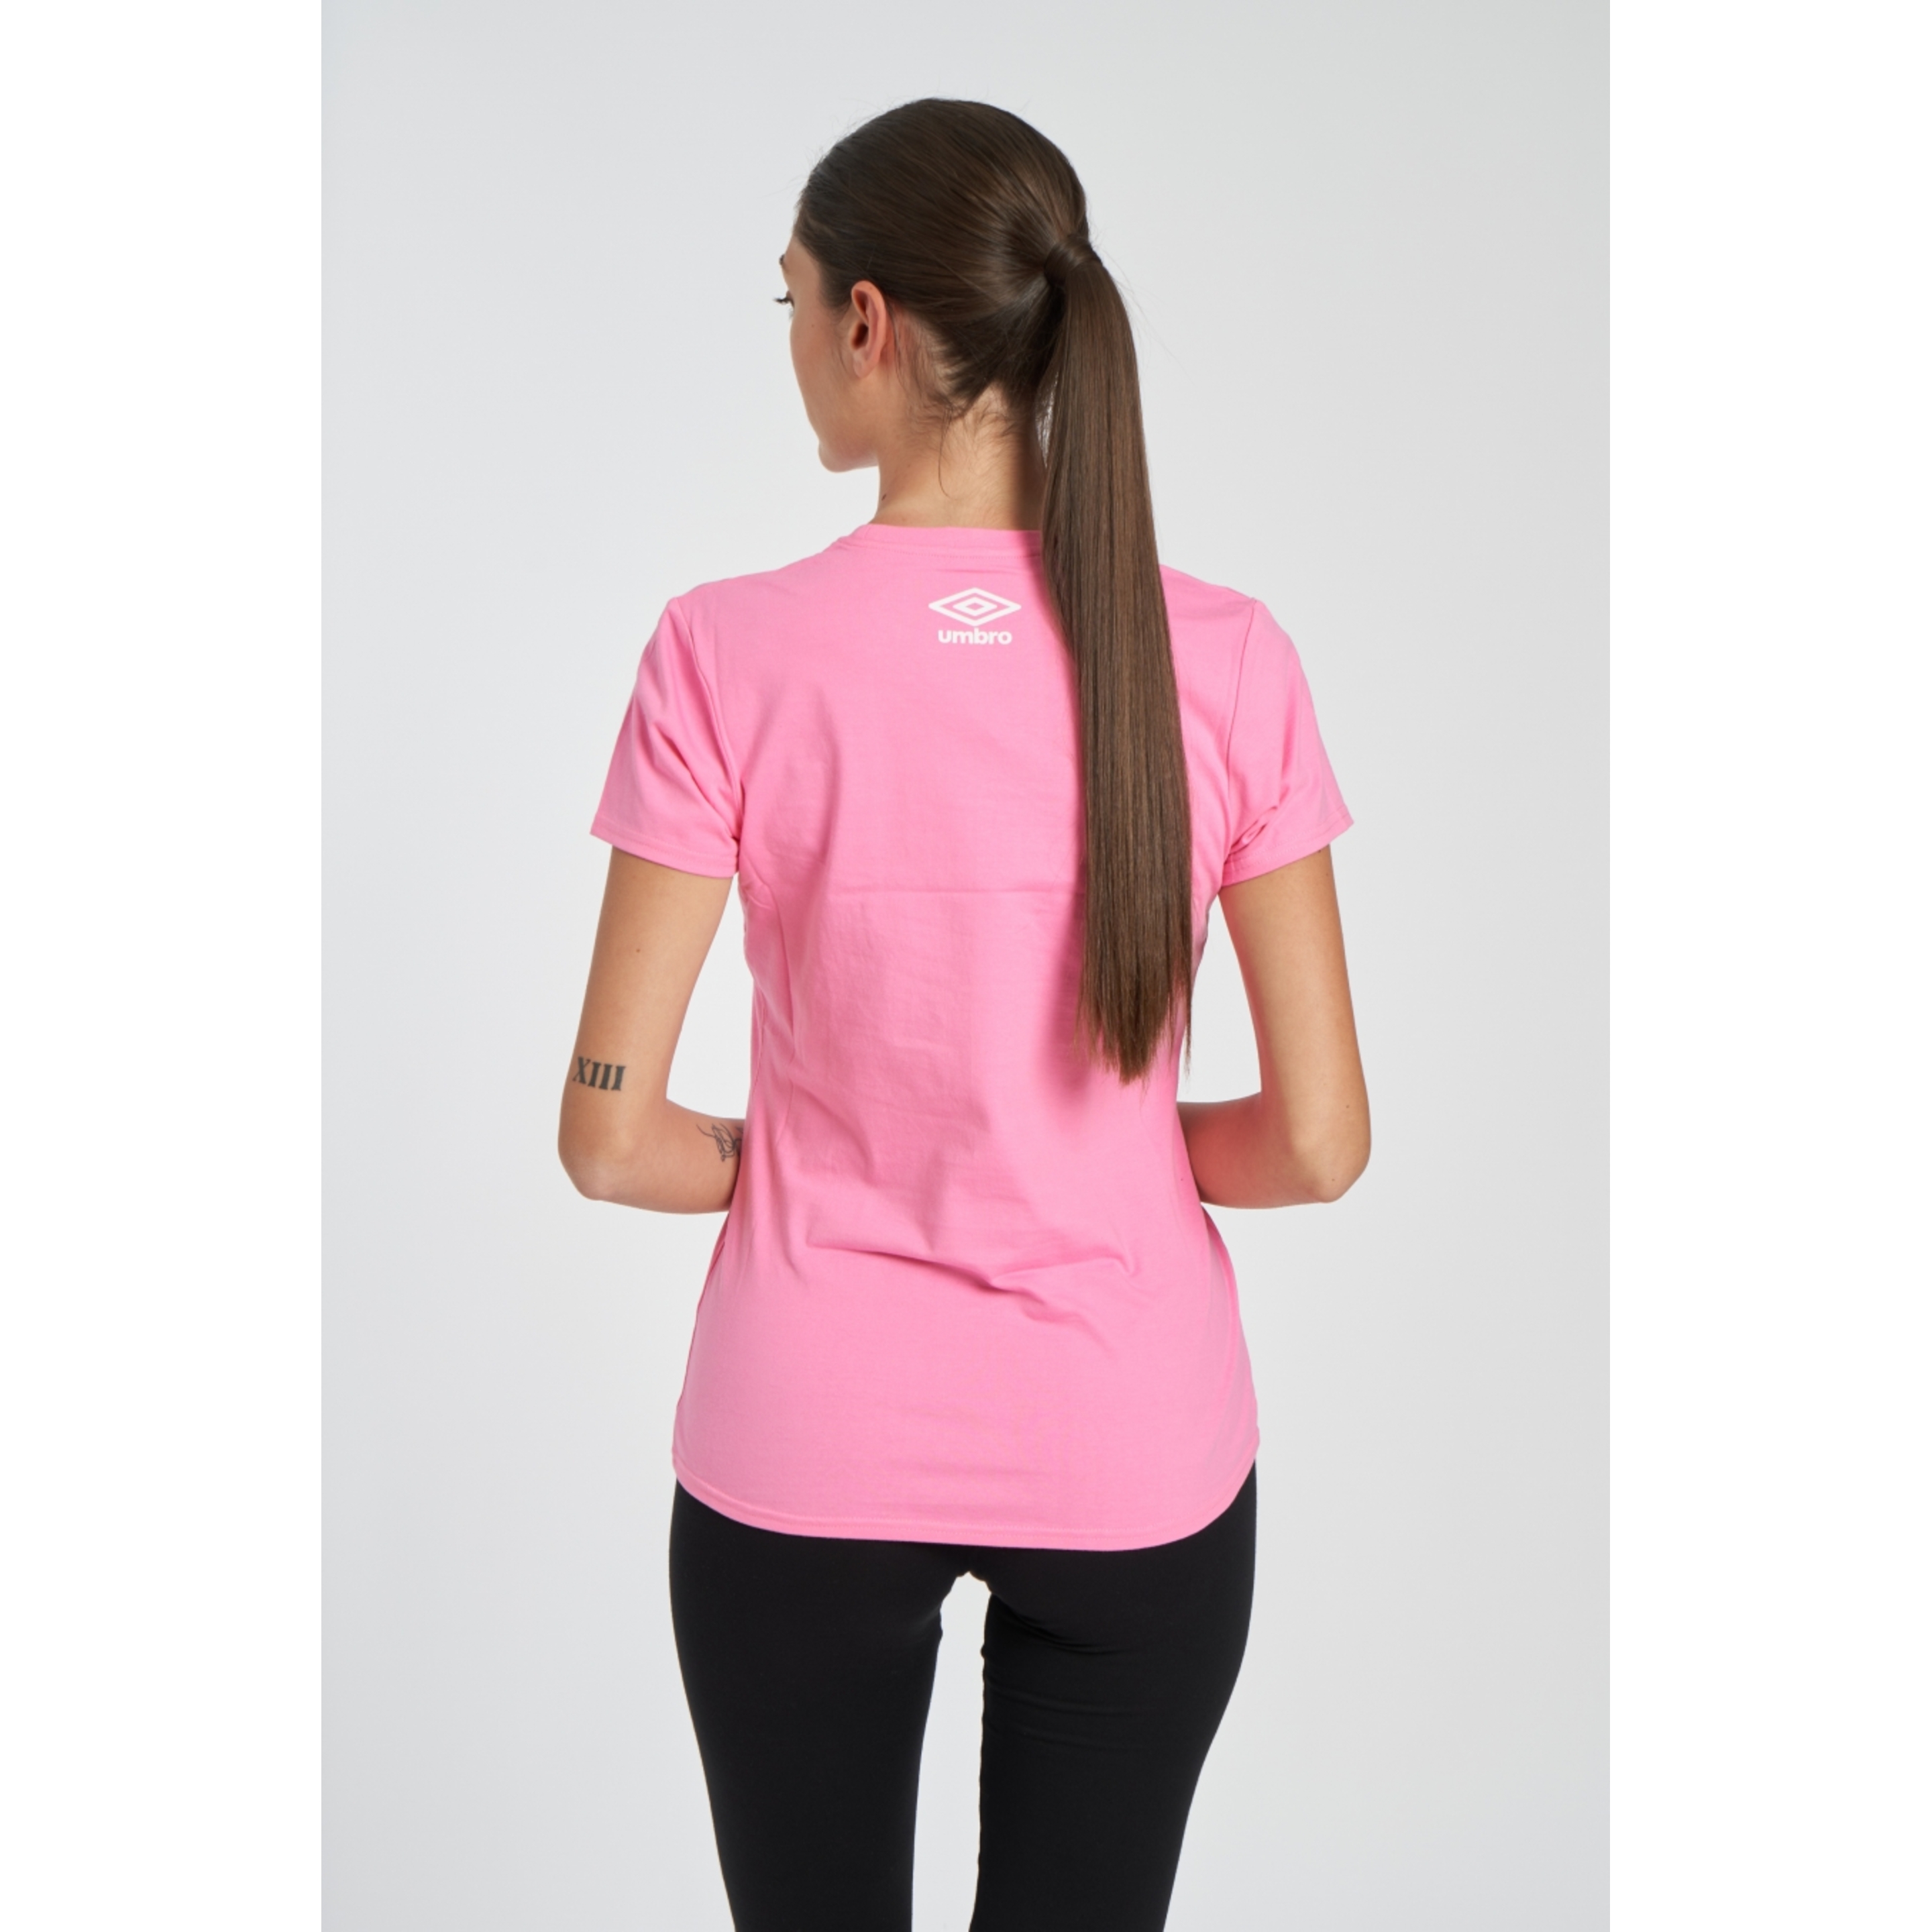 Camiseta Umbro Eridanus - Rosa - Camiseta Mujer Manga Corta  MKP